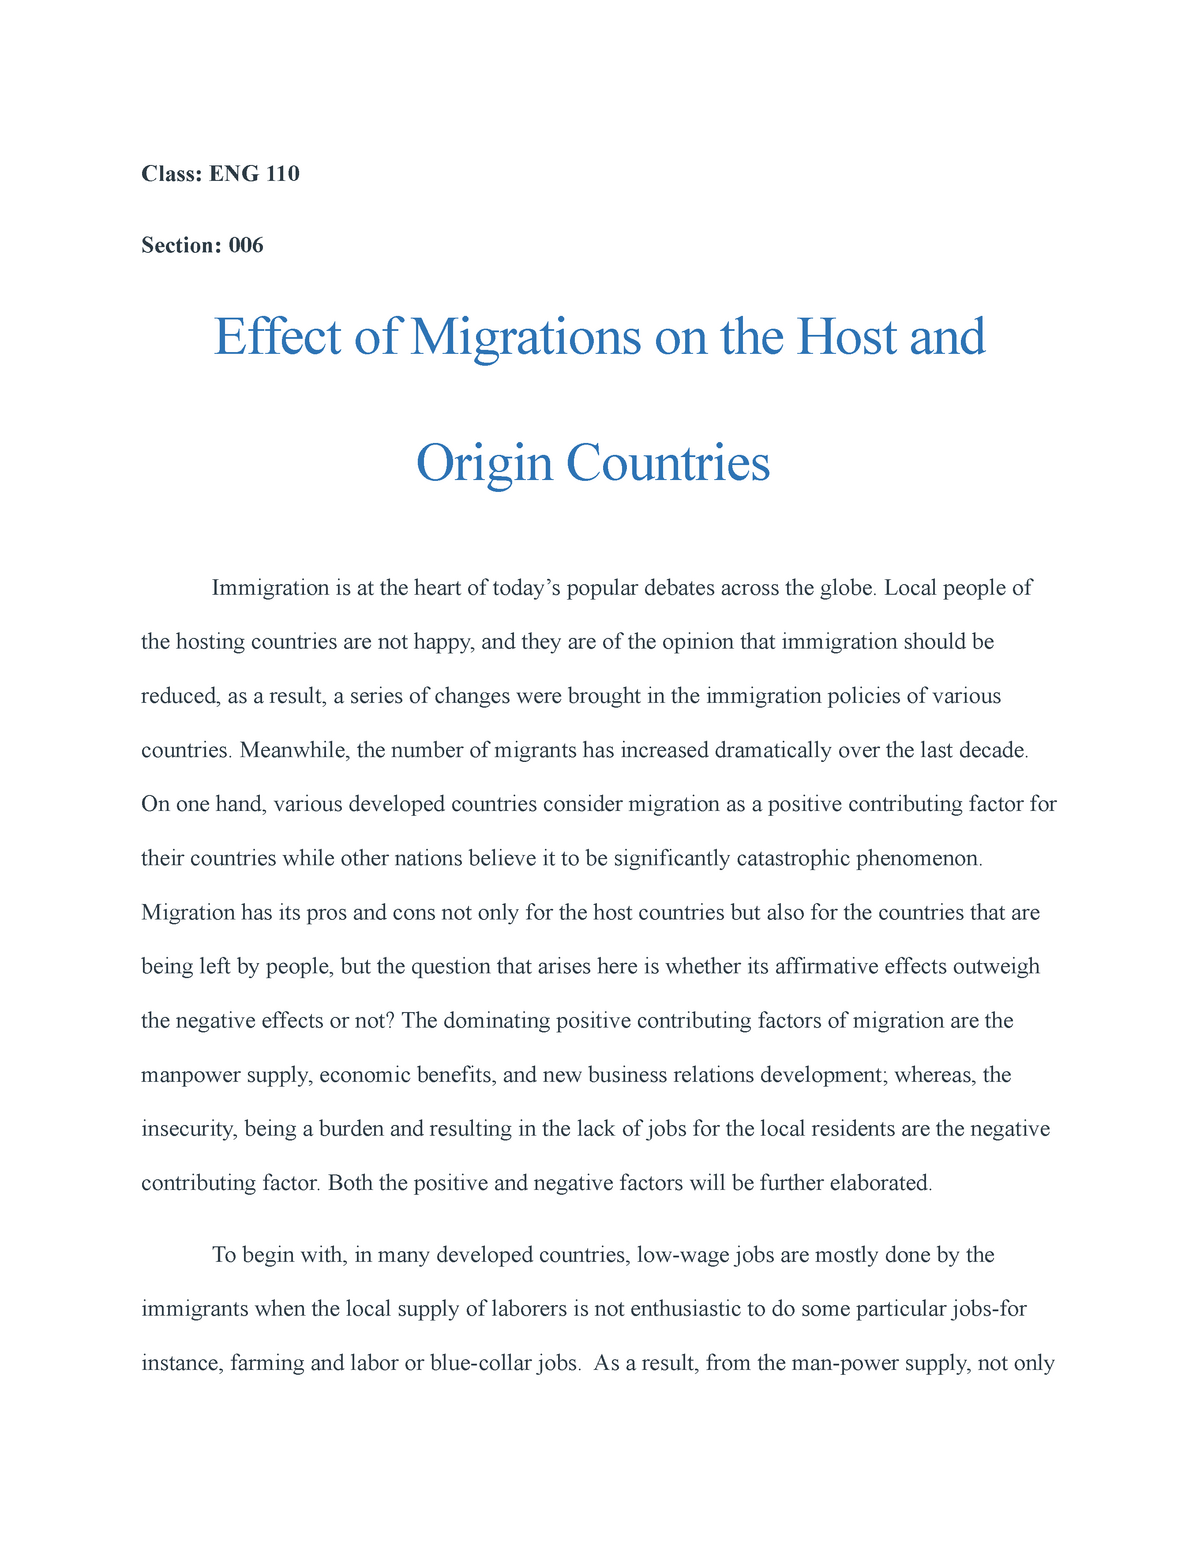 problems of migration essay